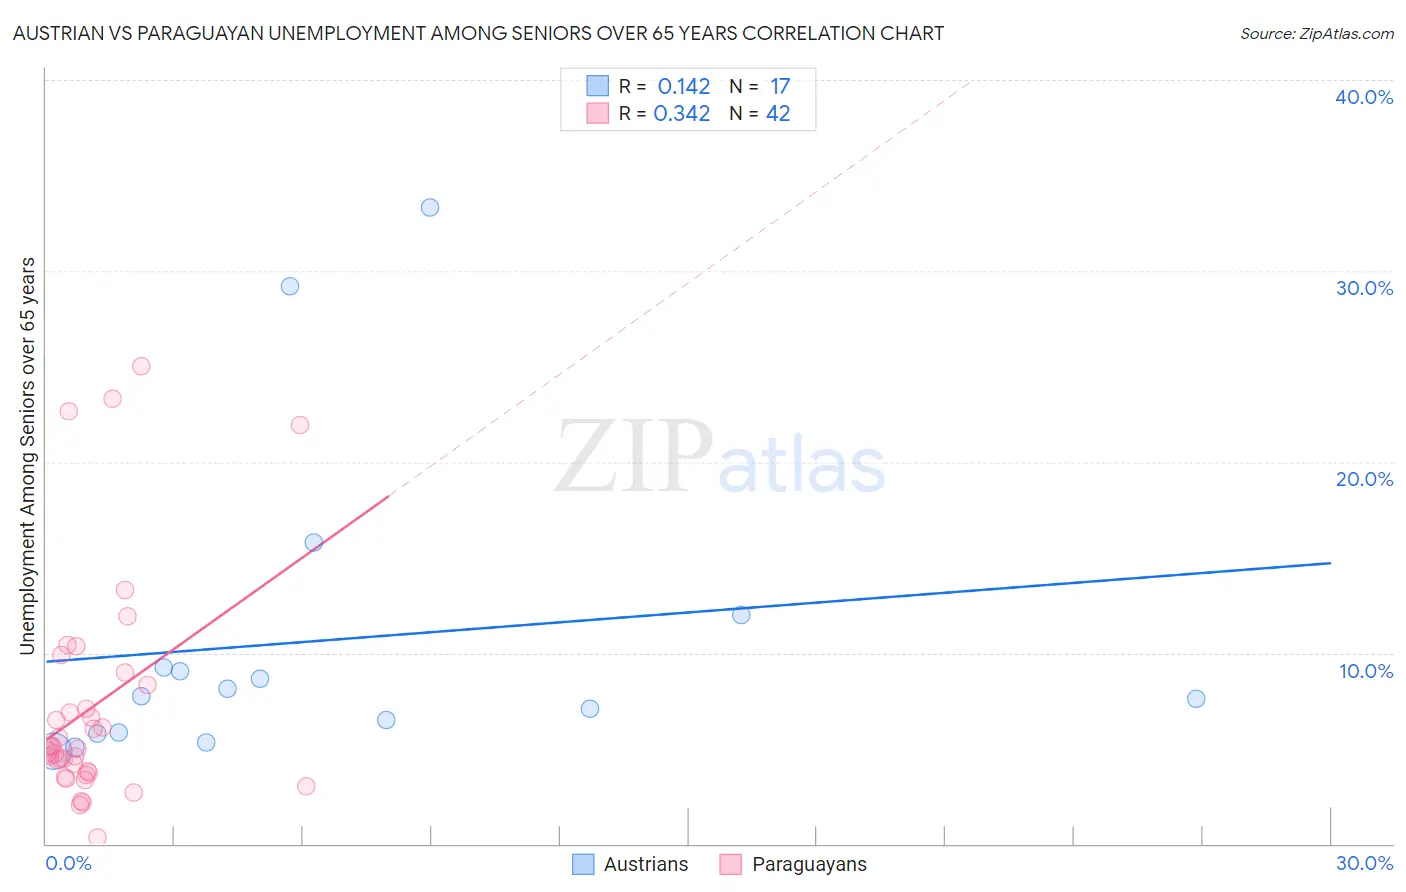 Austrian vs Paraguayan Unemployment Among Seniors over 65 years